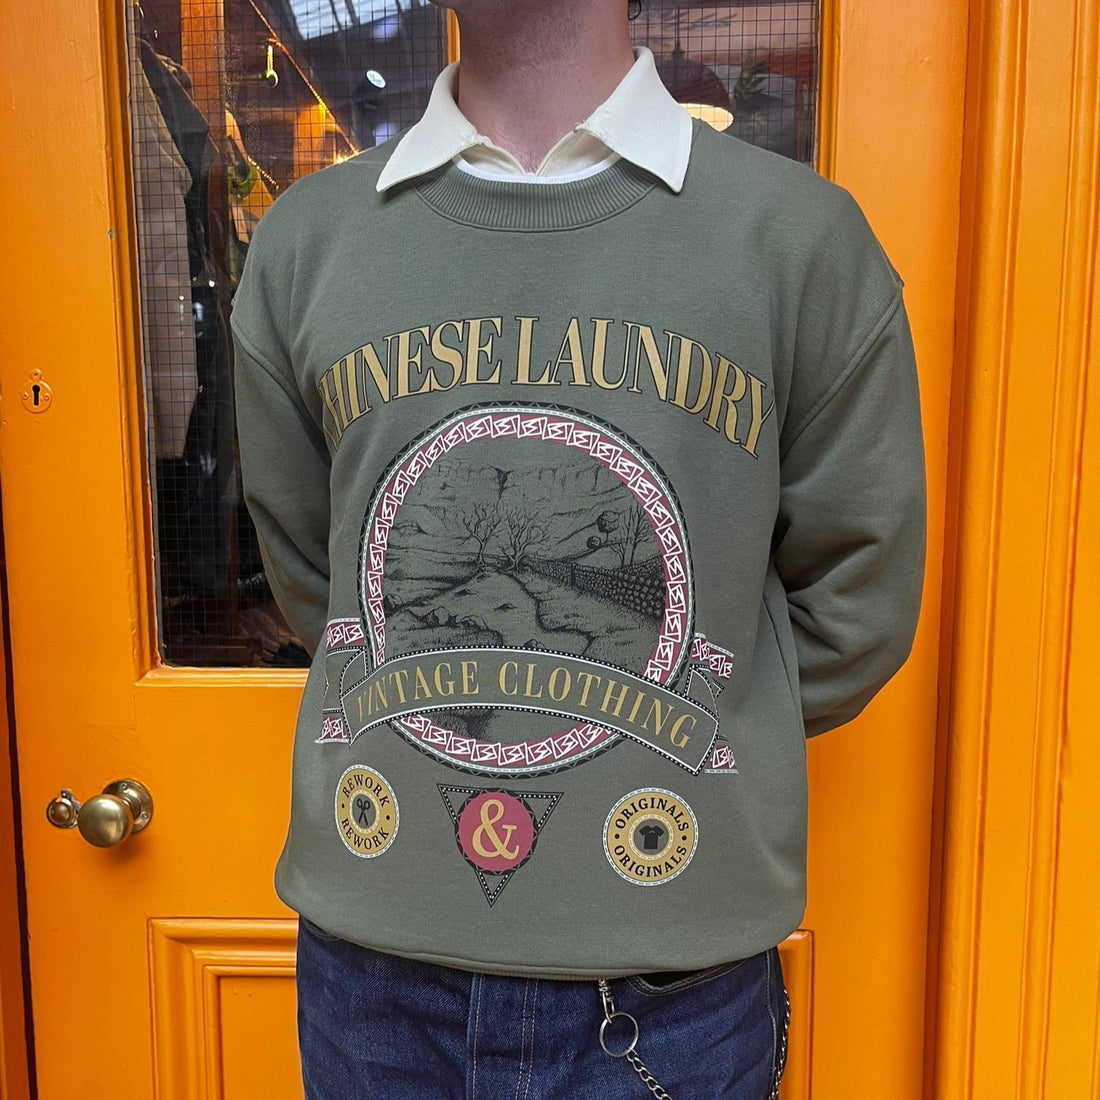 Pennsylvania Sweatshirt